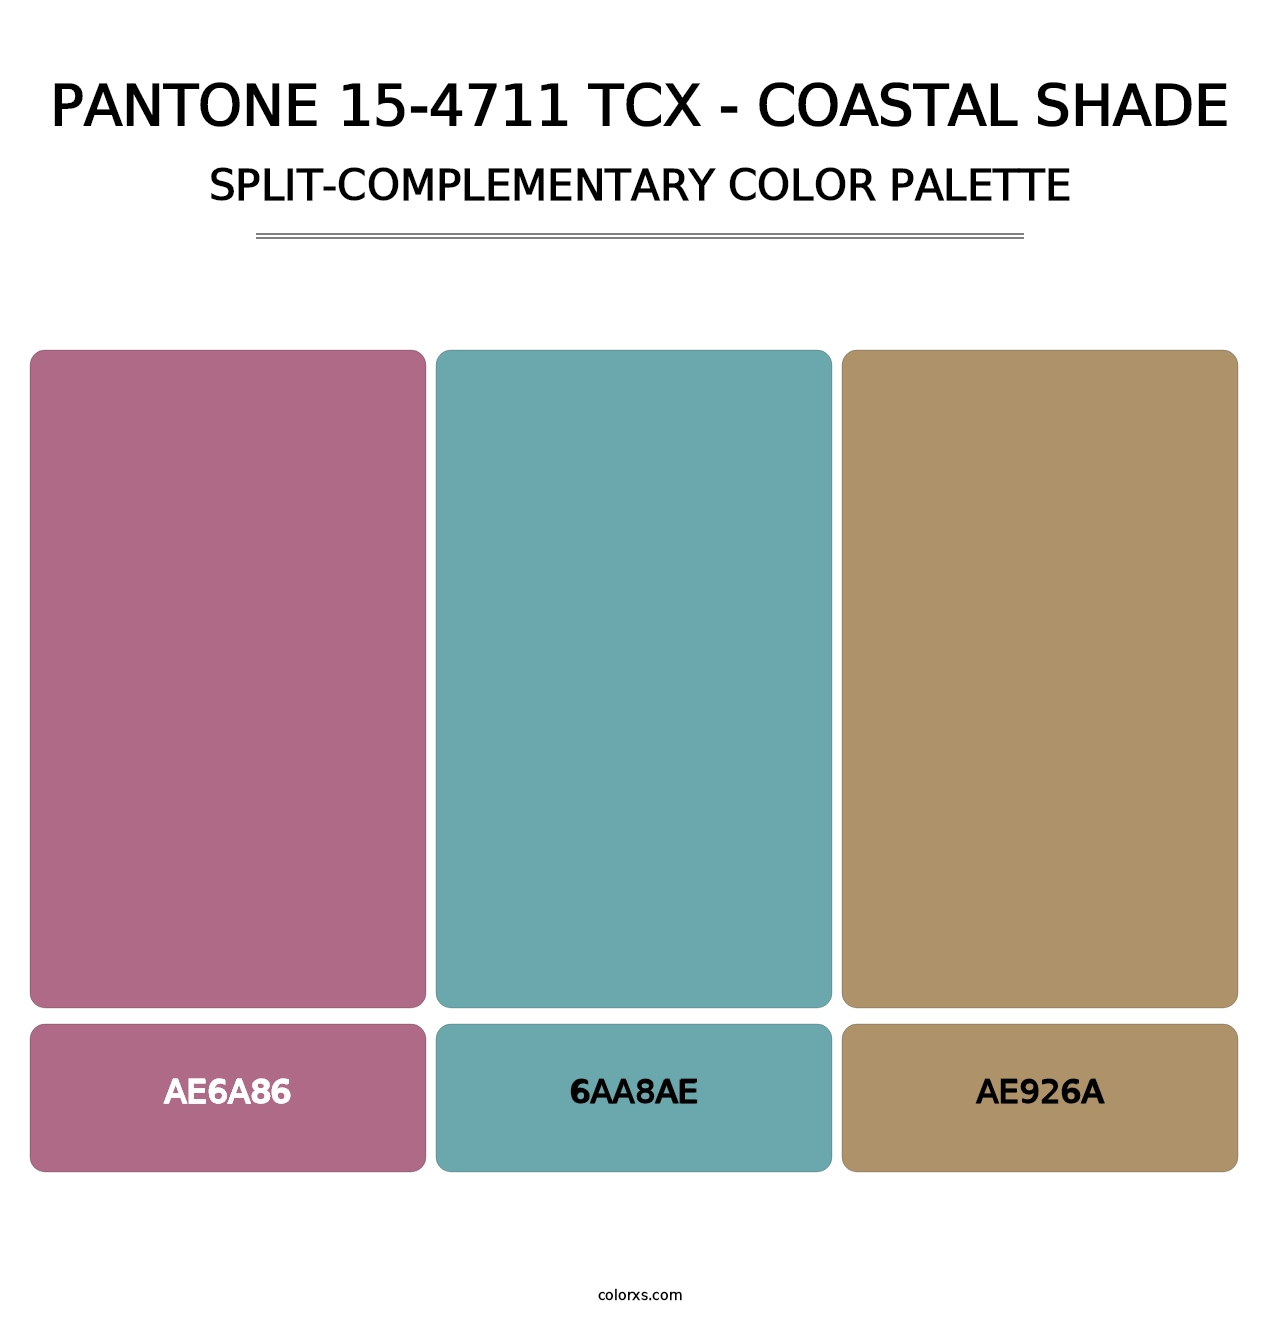 PANTONE 15-4711 TCX - Coastal Shade - Split-Complementary Color Palette